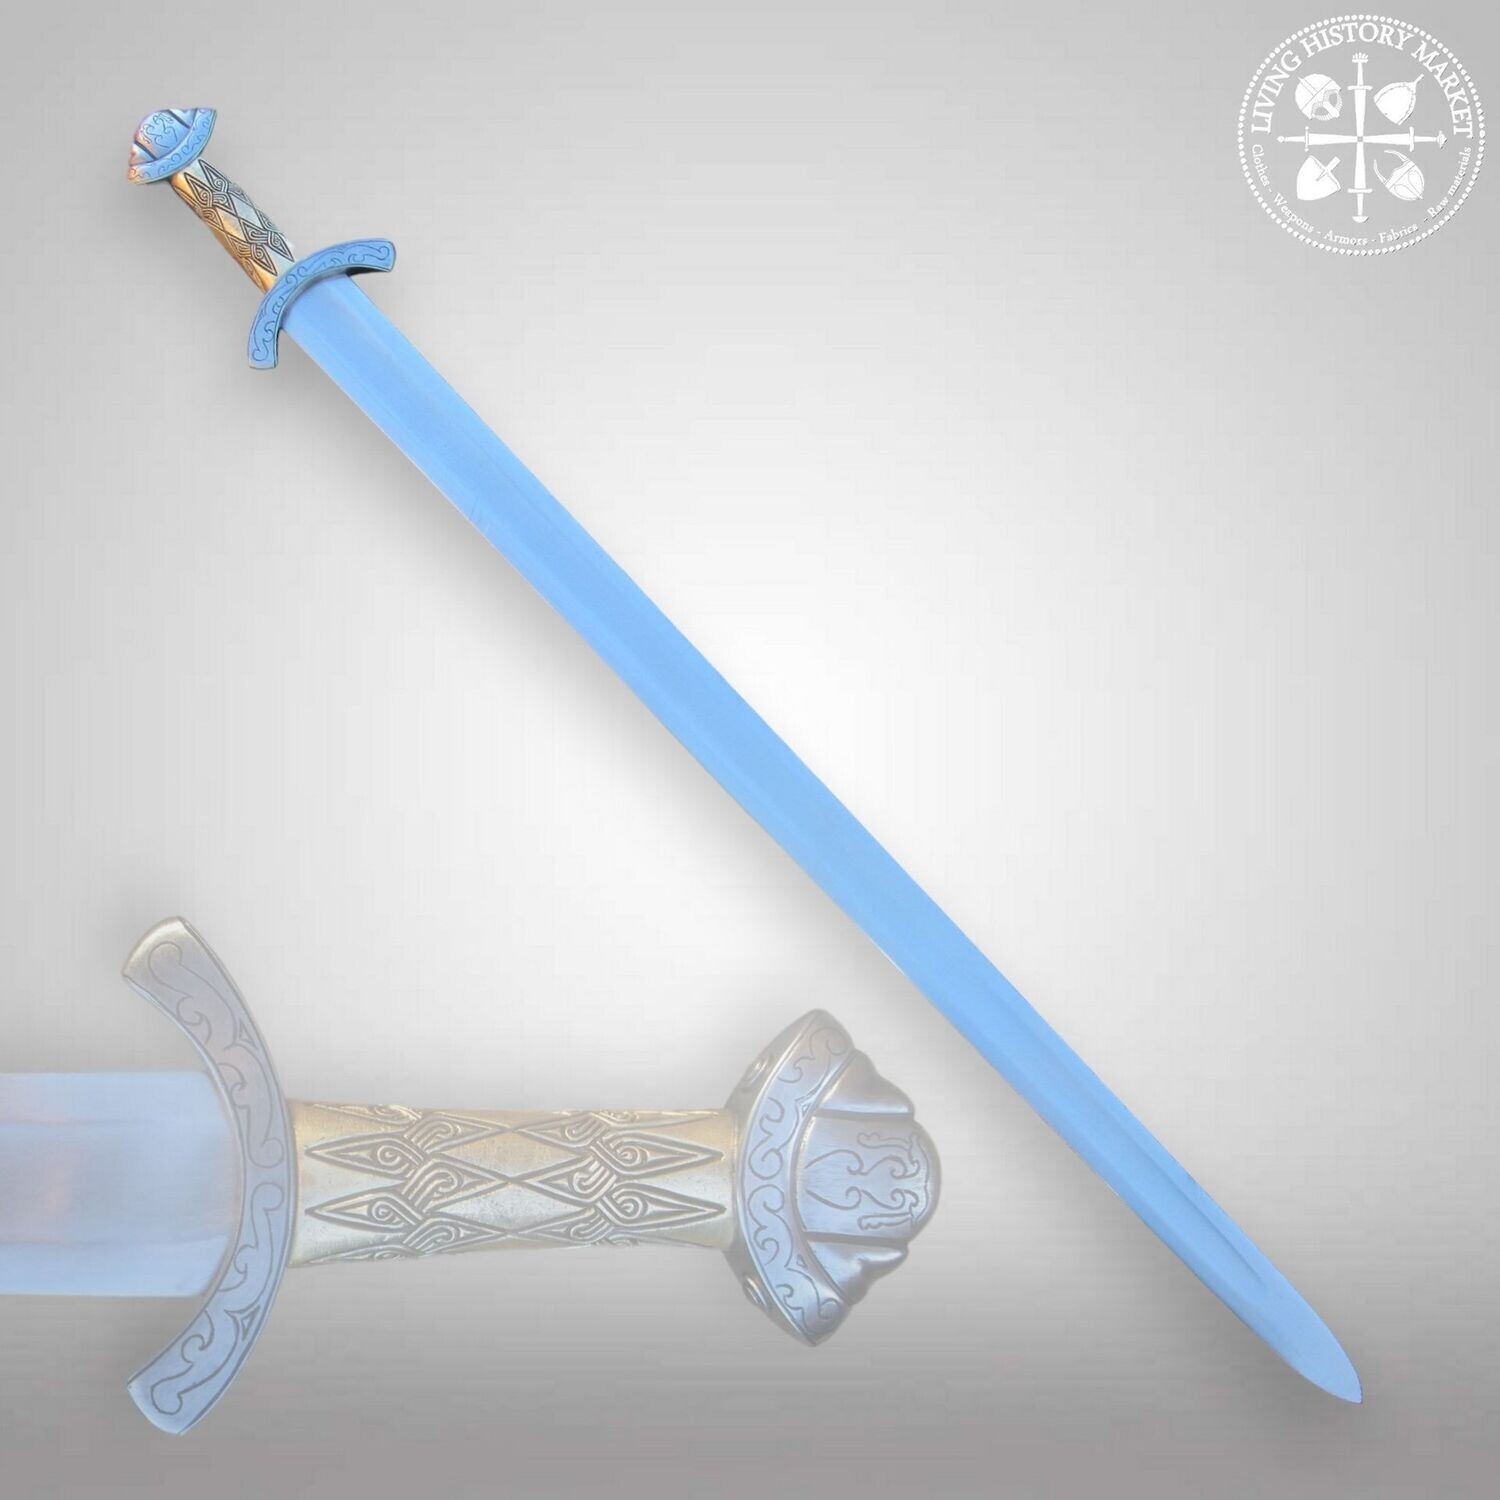 Chernaya Mogila (Chernigov) sword - Rus / Viking - 10 century - Elaborated Version